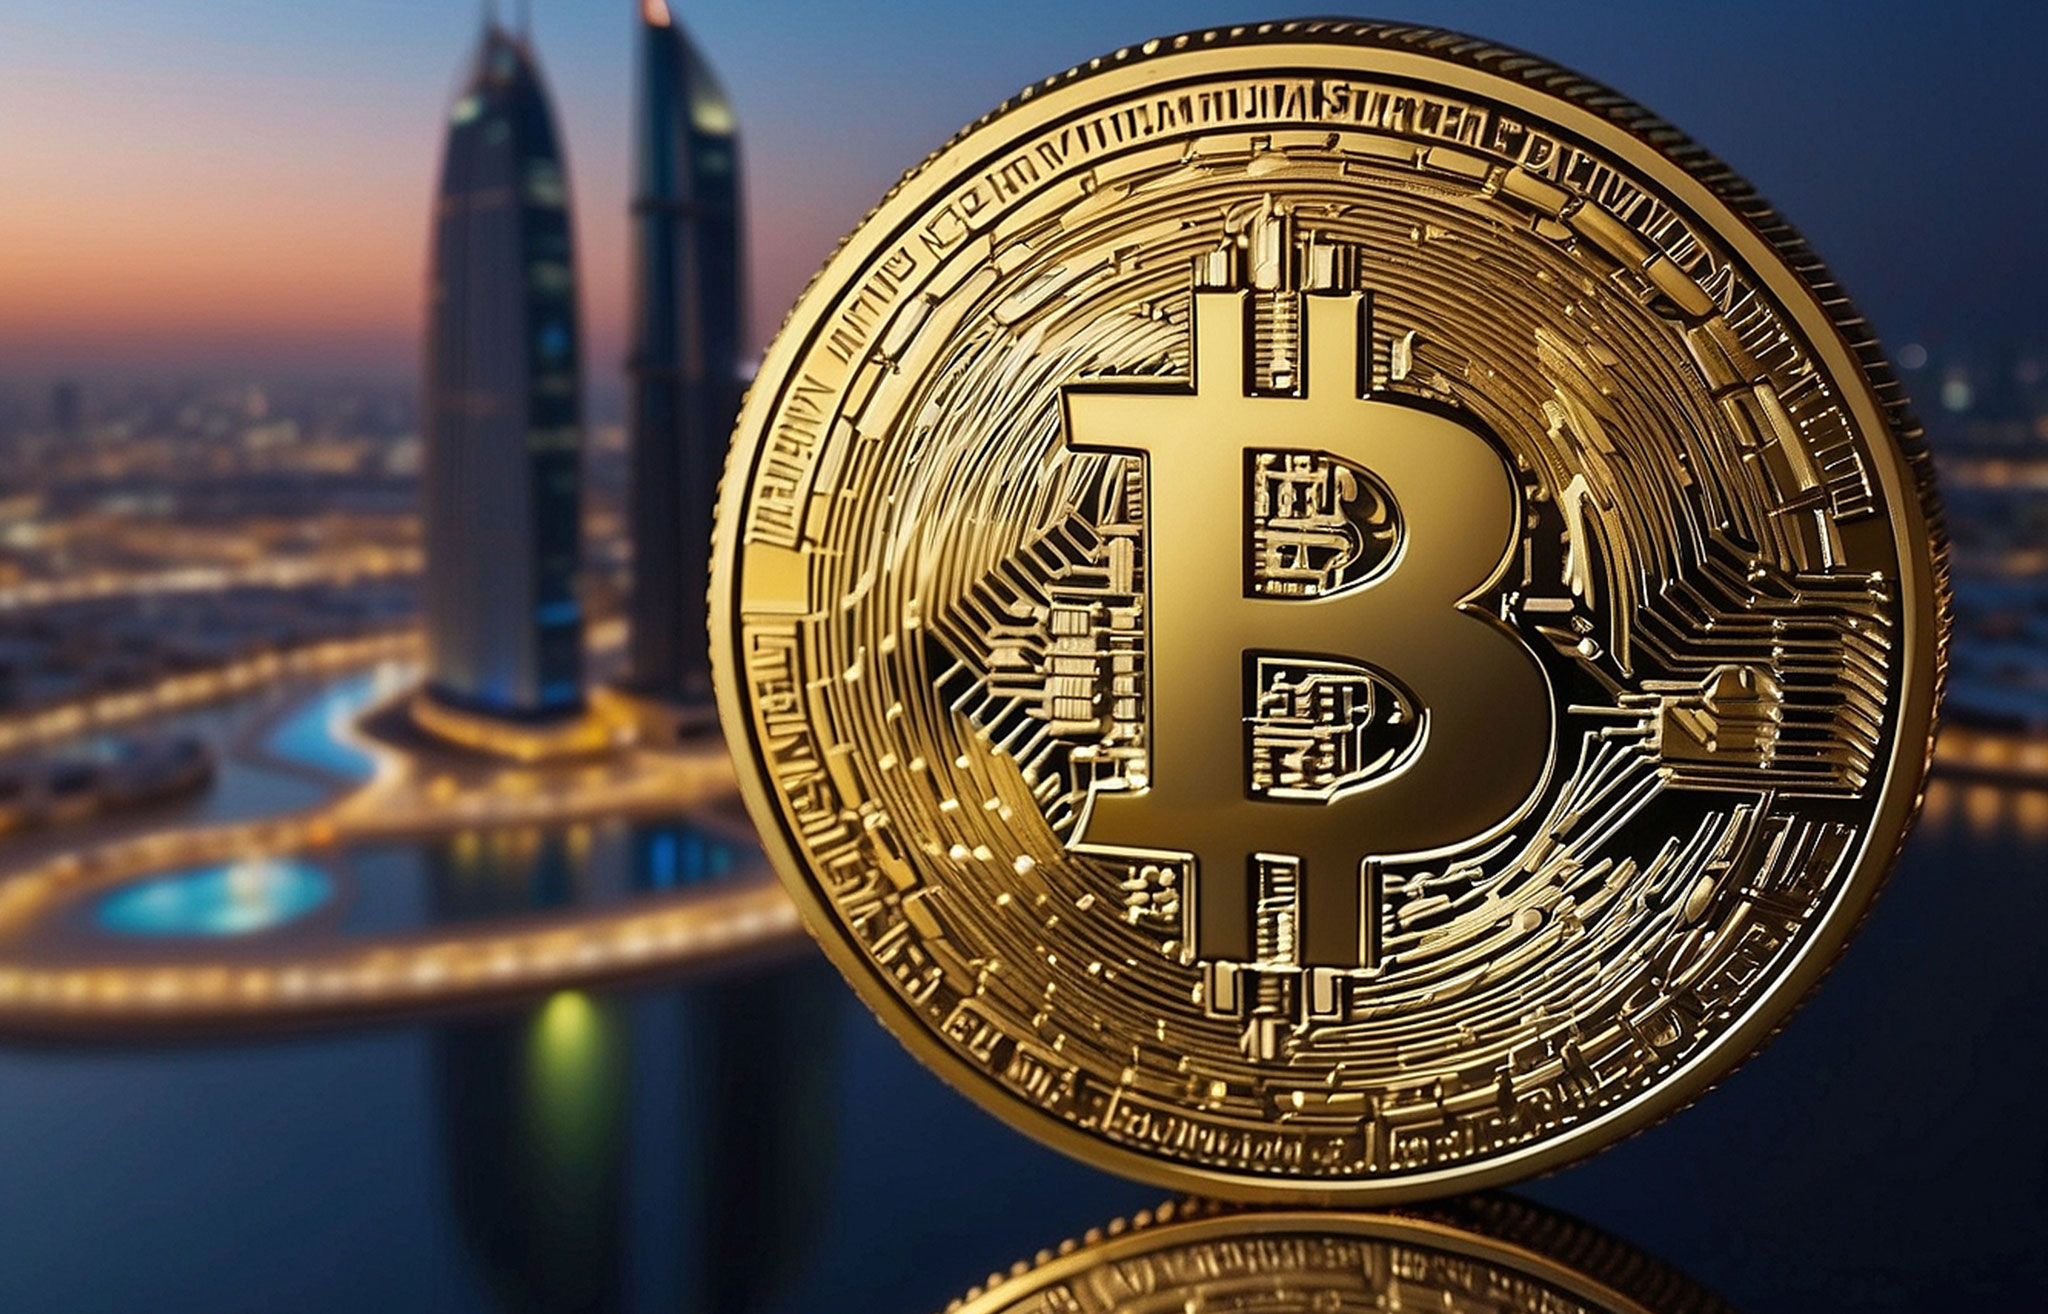 ExchangeDesk - Is Bitcoin allowed in Dubai?